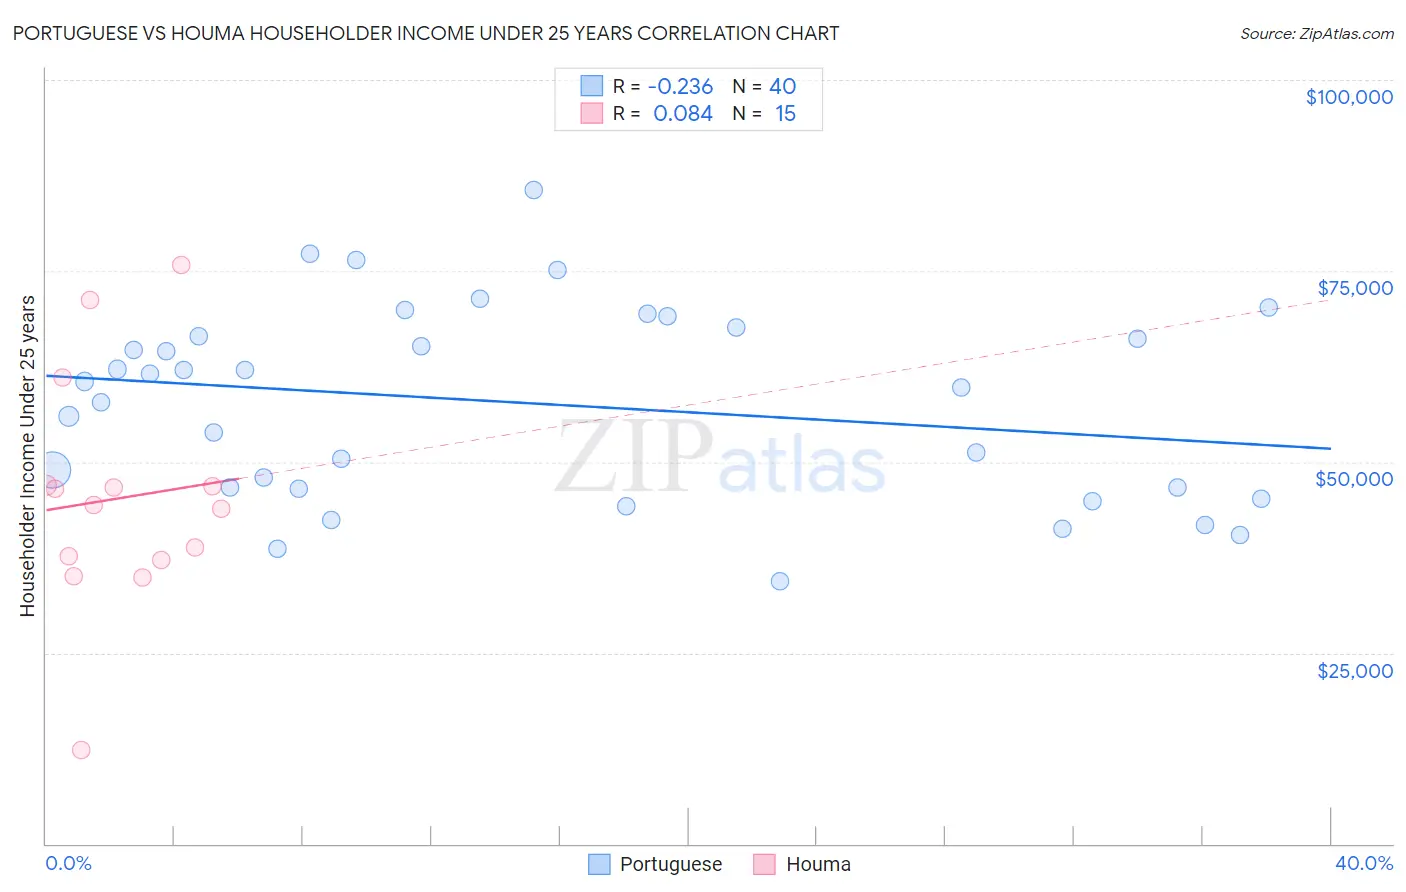 Portuguese vs Houma Householder Income Under 25 years